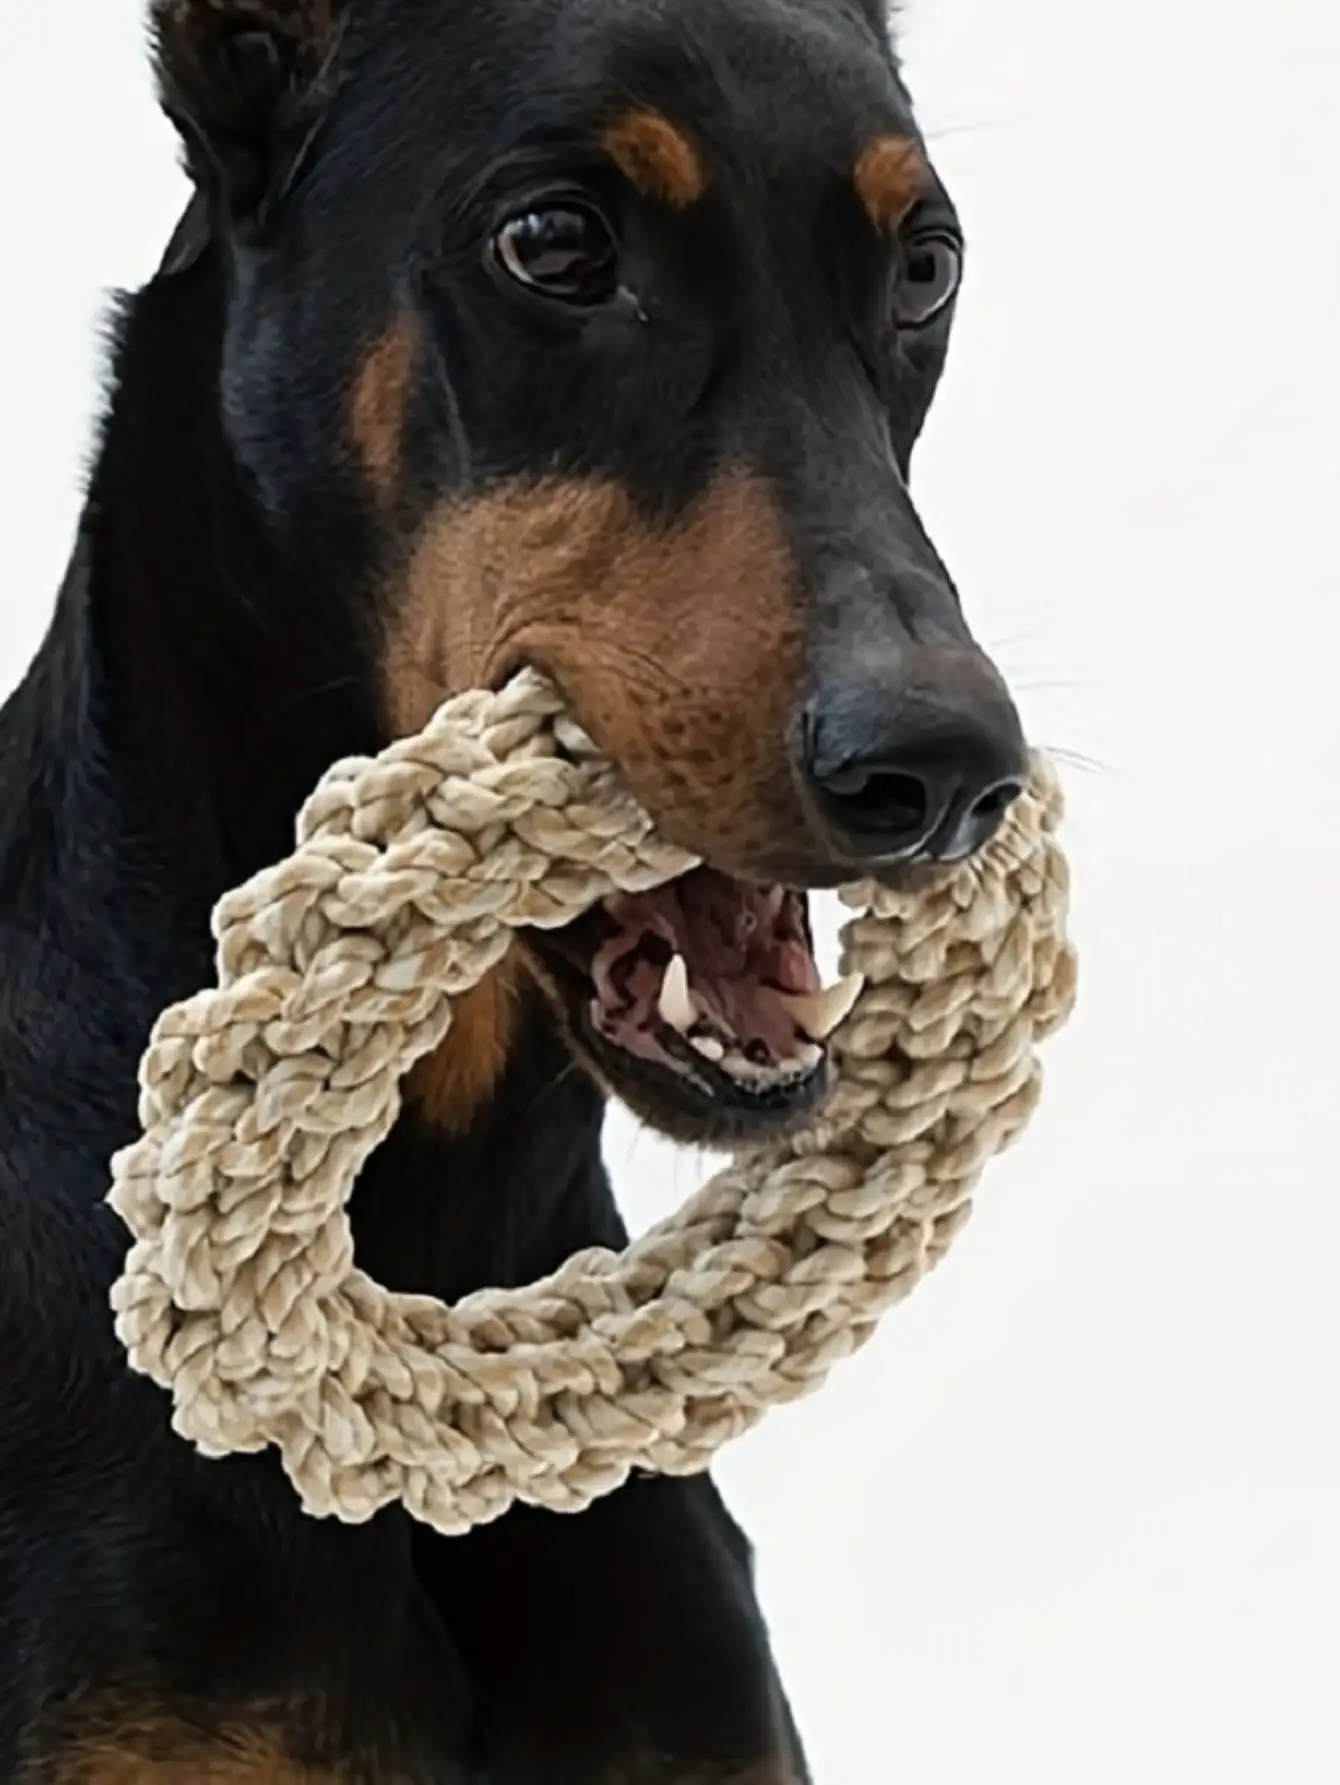 Pet Dog Rope Toy Durable Chew Bite Resistant Pet Toys for Medium Large Dogs Golden Retriever Pitbull Labrador Supplies